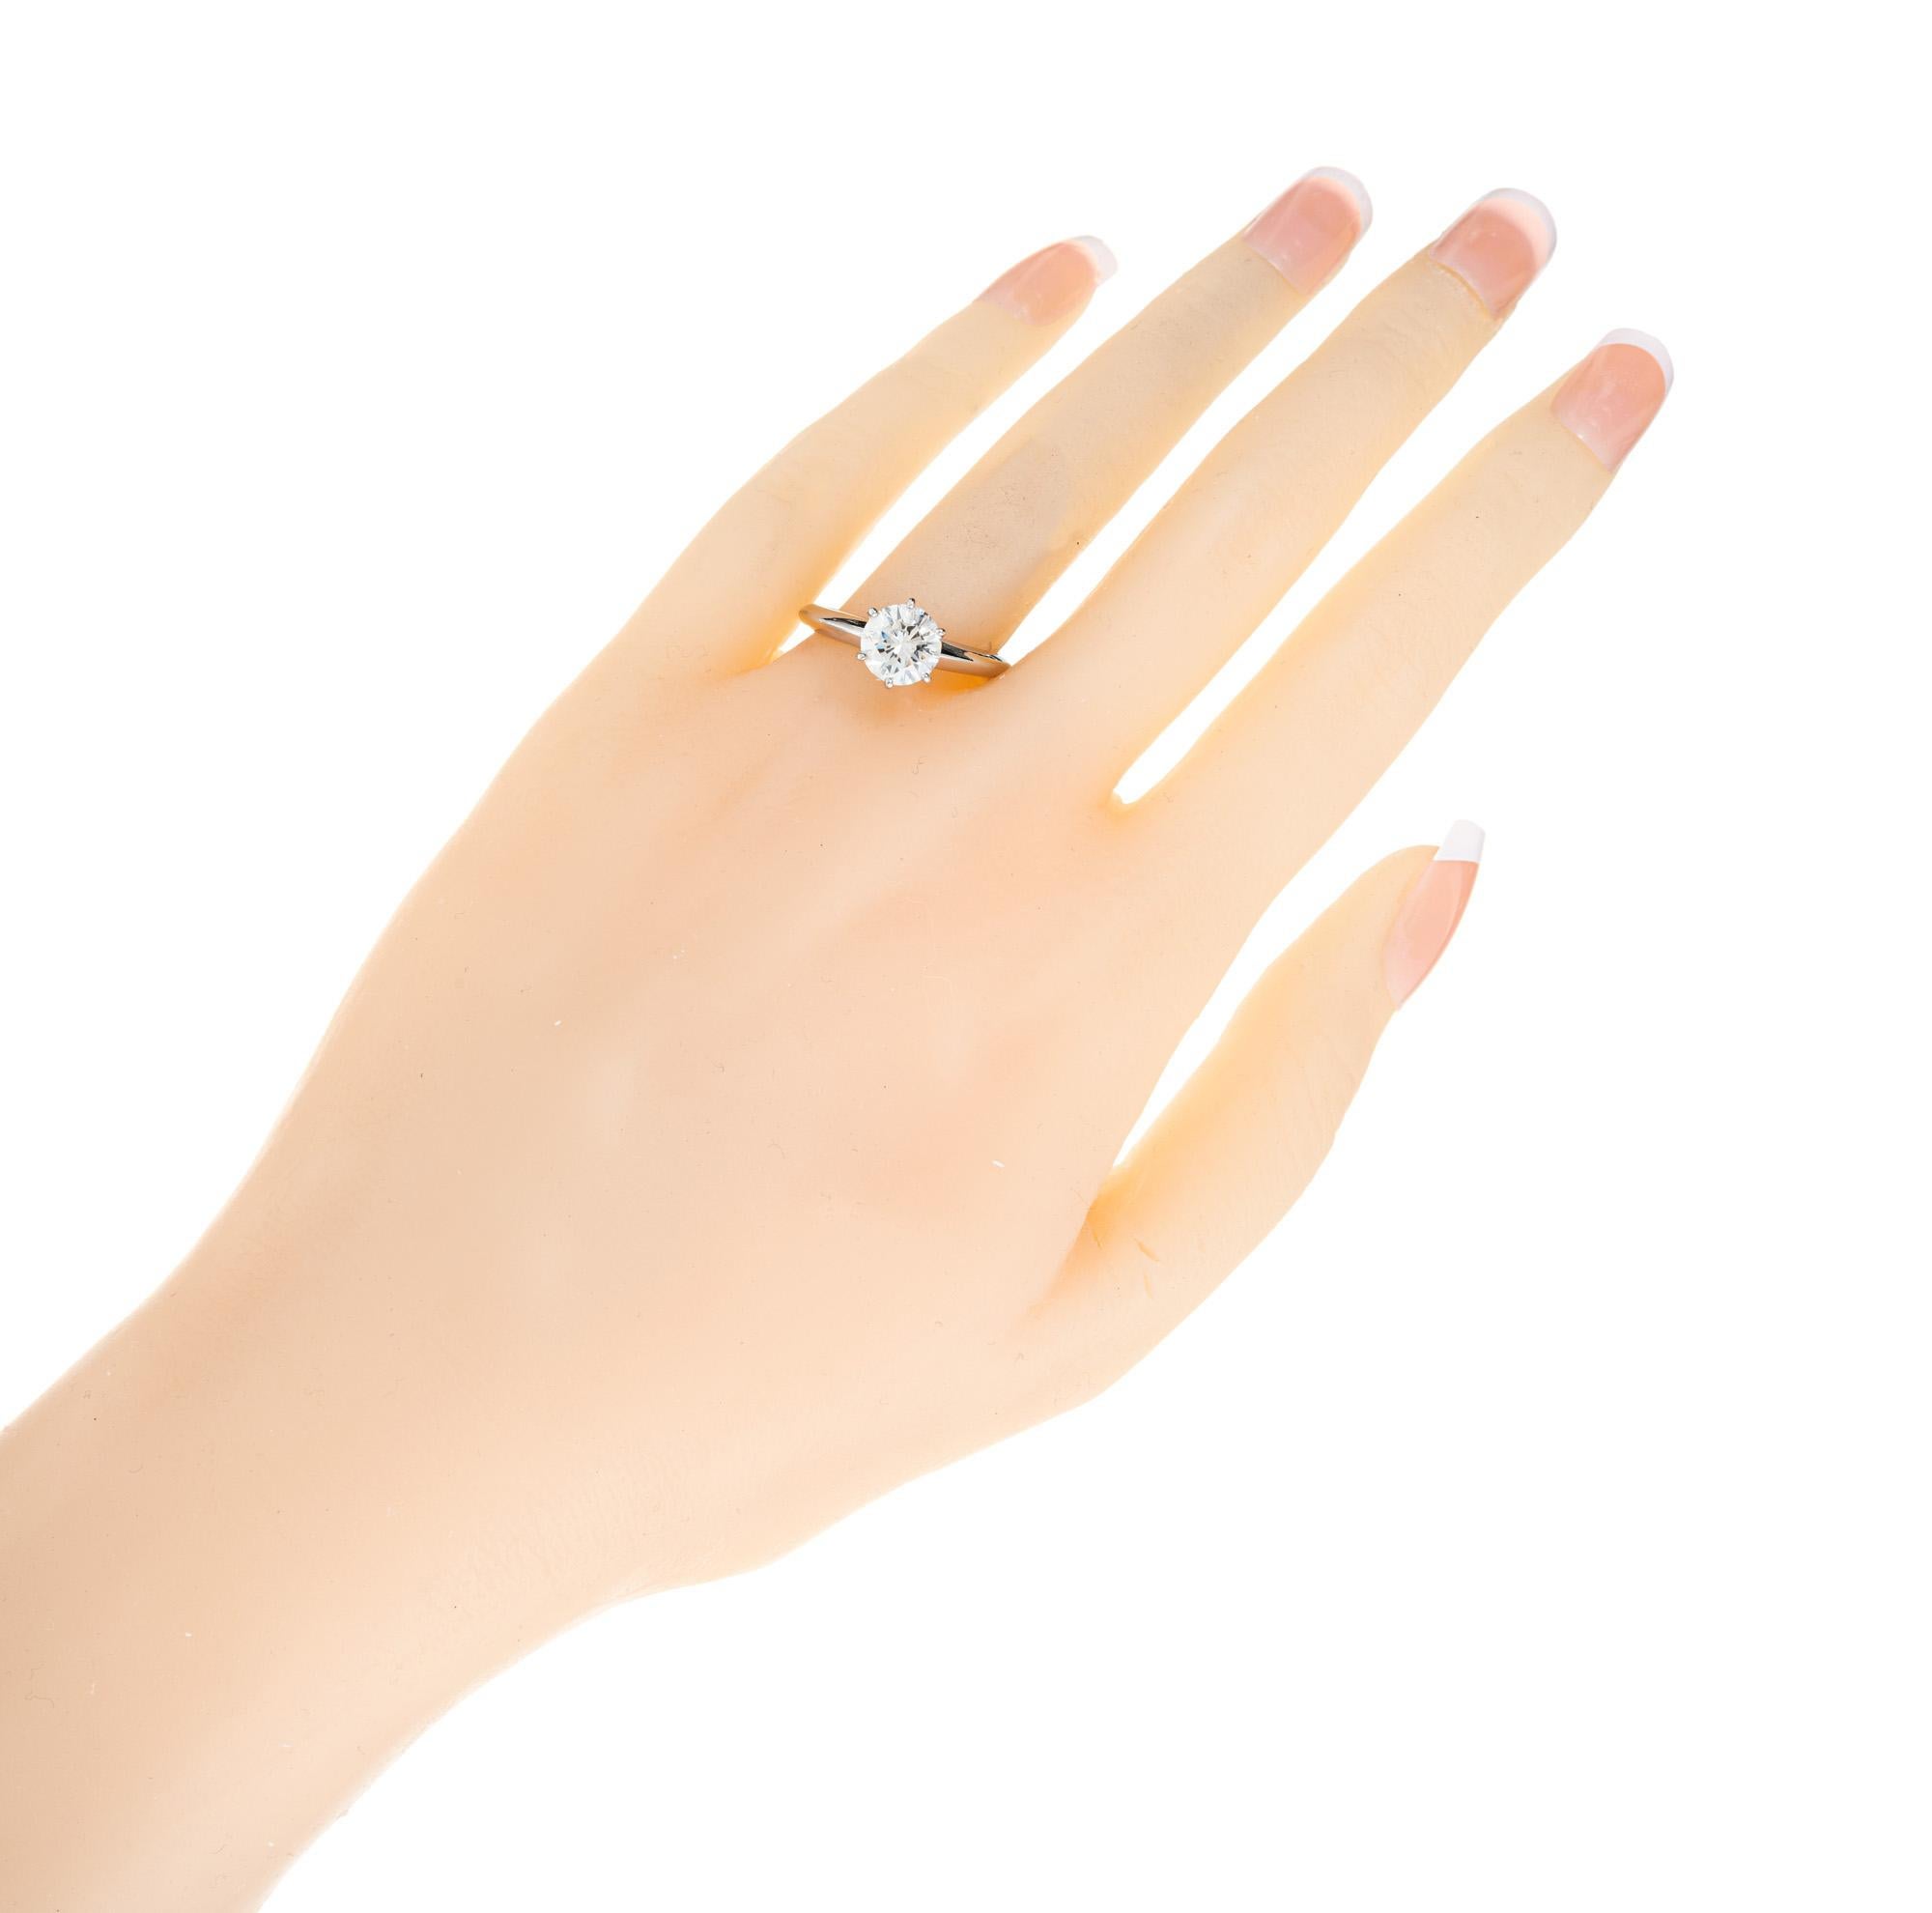 EGL Certified 1.41 Carat Round Diamond Platinum Solitaire Engagement Ring For Sale 3